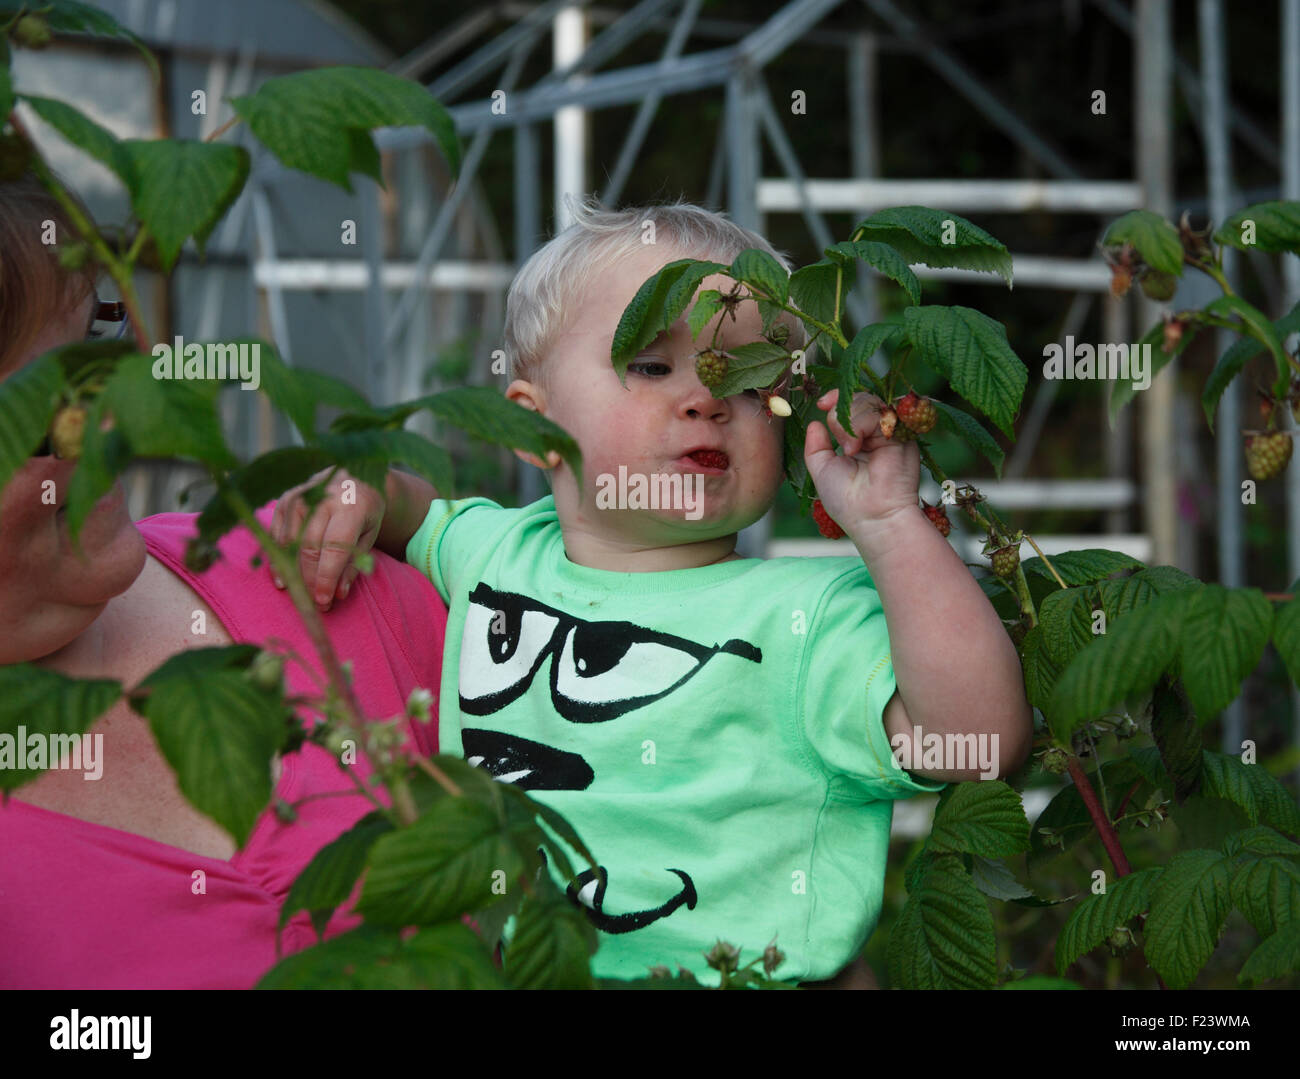 Toddler eating raspberry Stock Photo